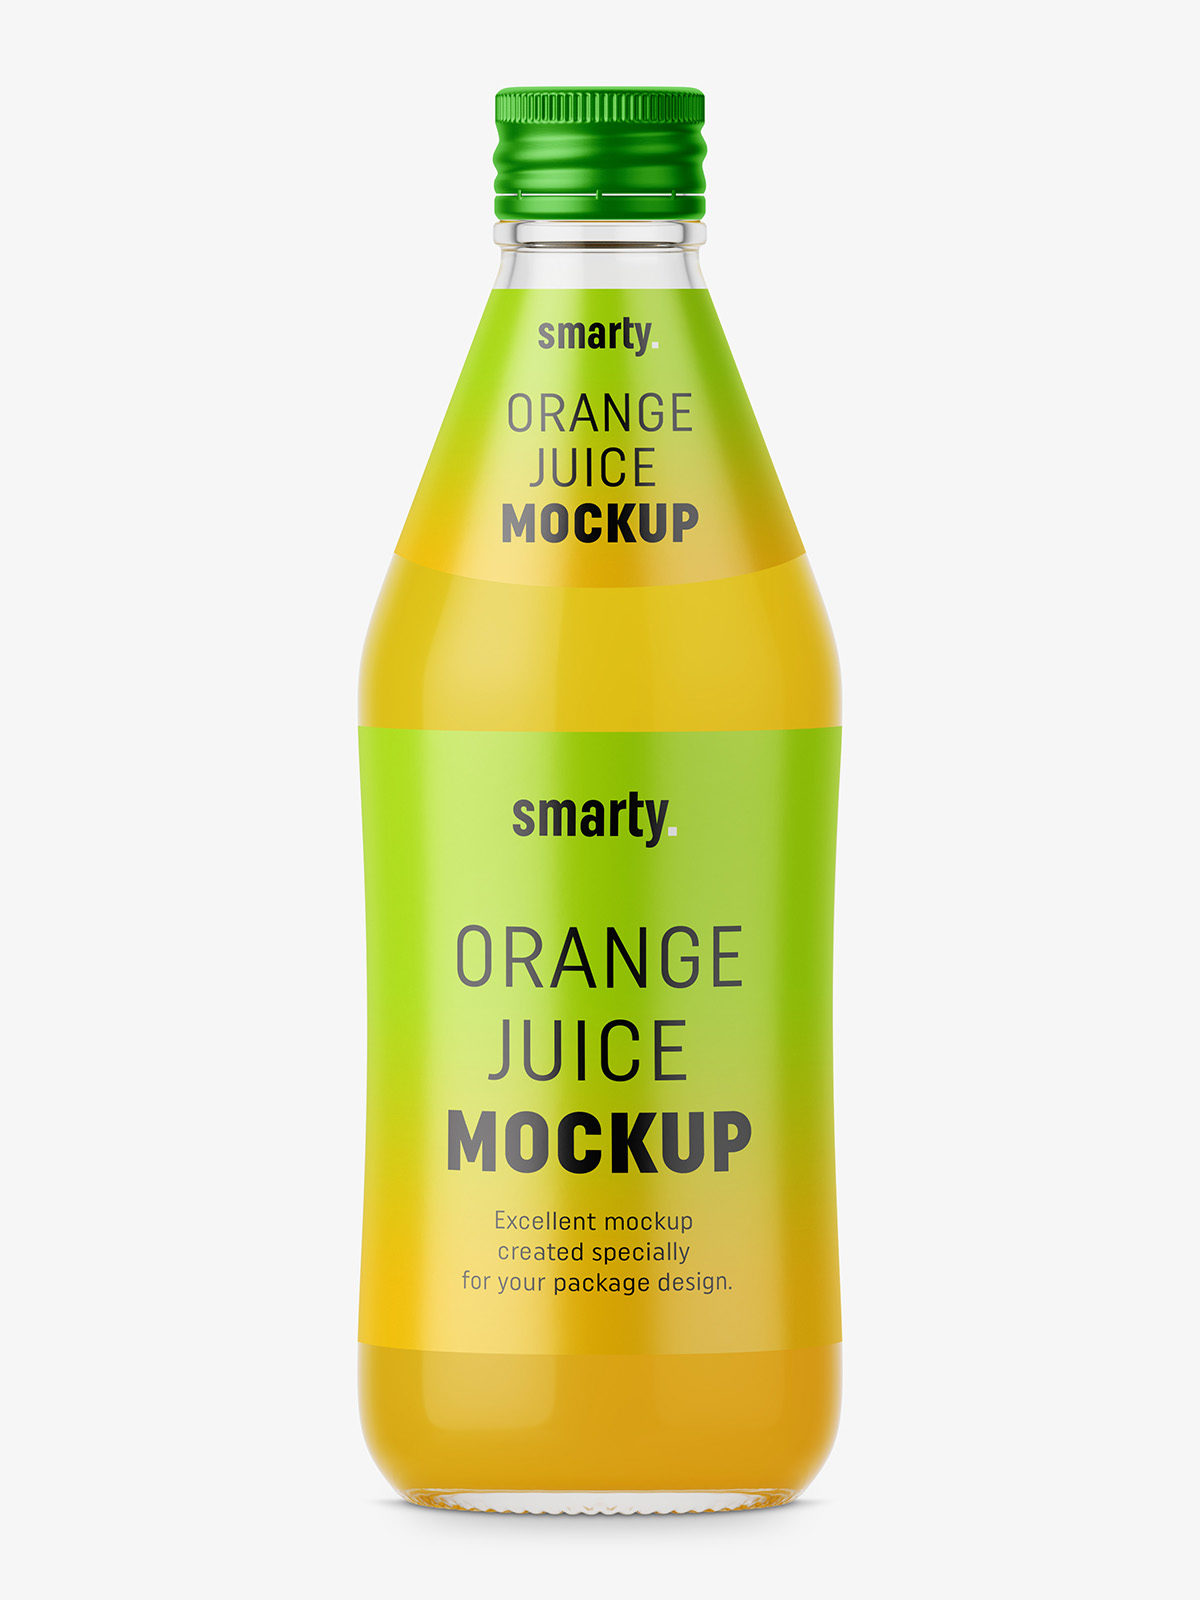 https://smartymockups.com/wp-content/uploads/2017/06/Orange_Juice_Mockup_2.jpg